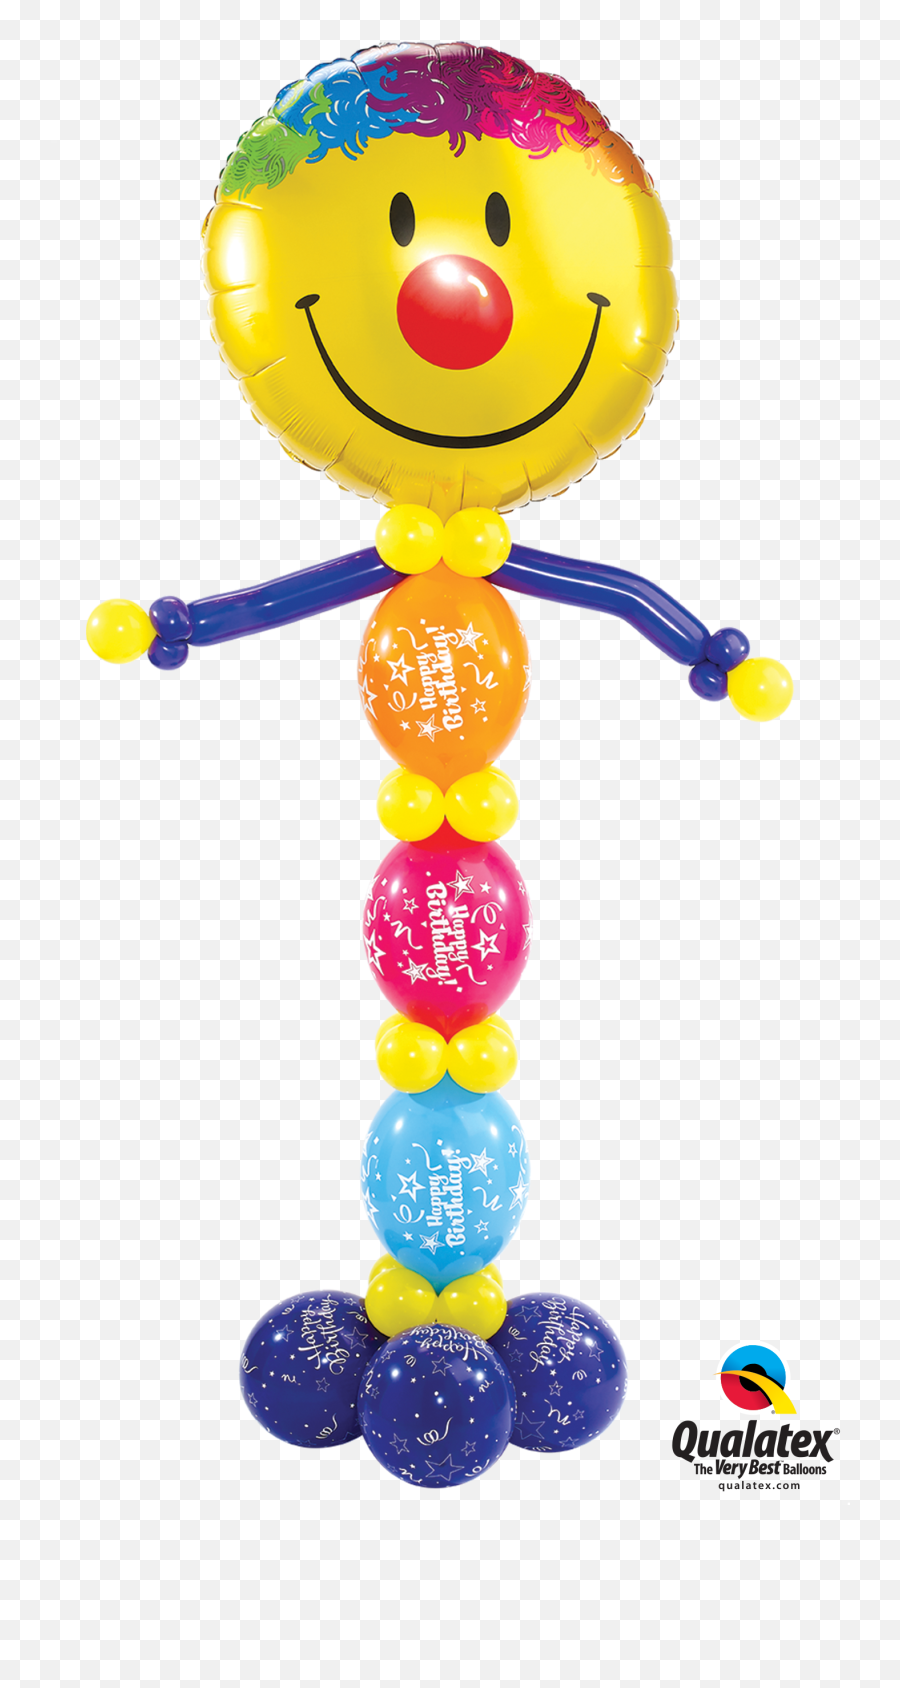 Childrens Smiley Birthday Party Friend - Qualatex Emoji,Emoticon Birthday